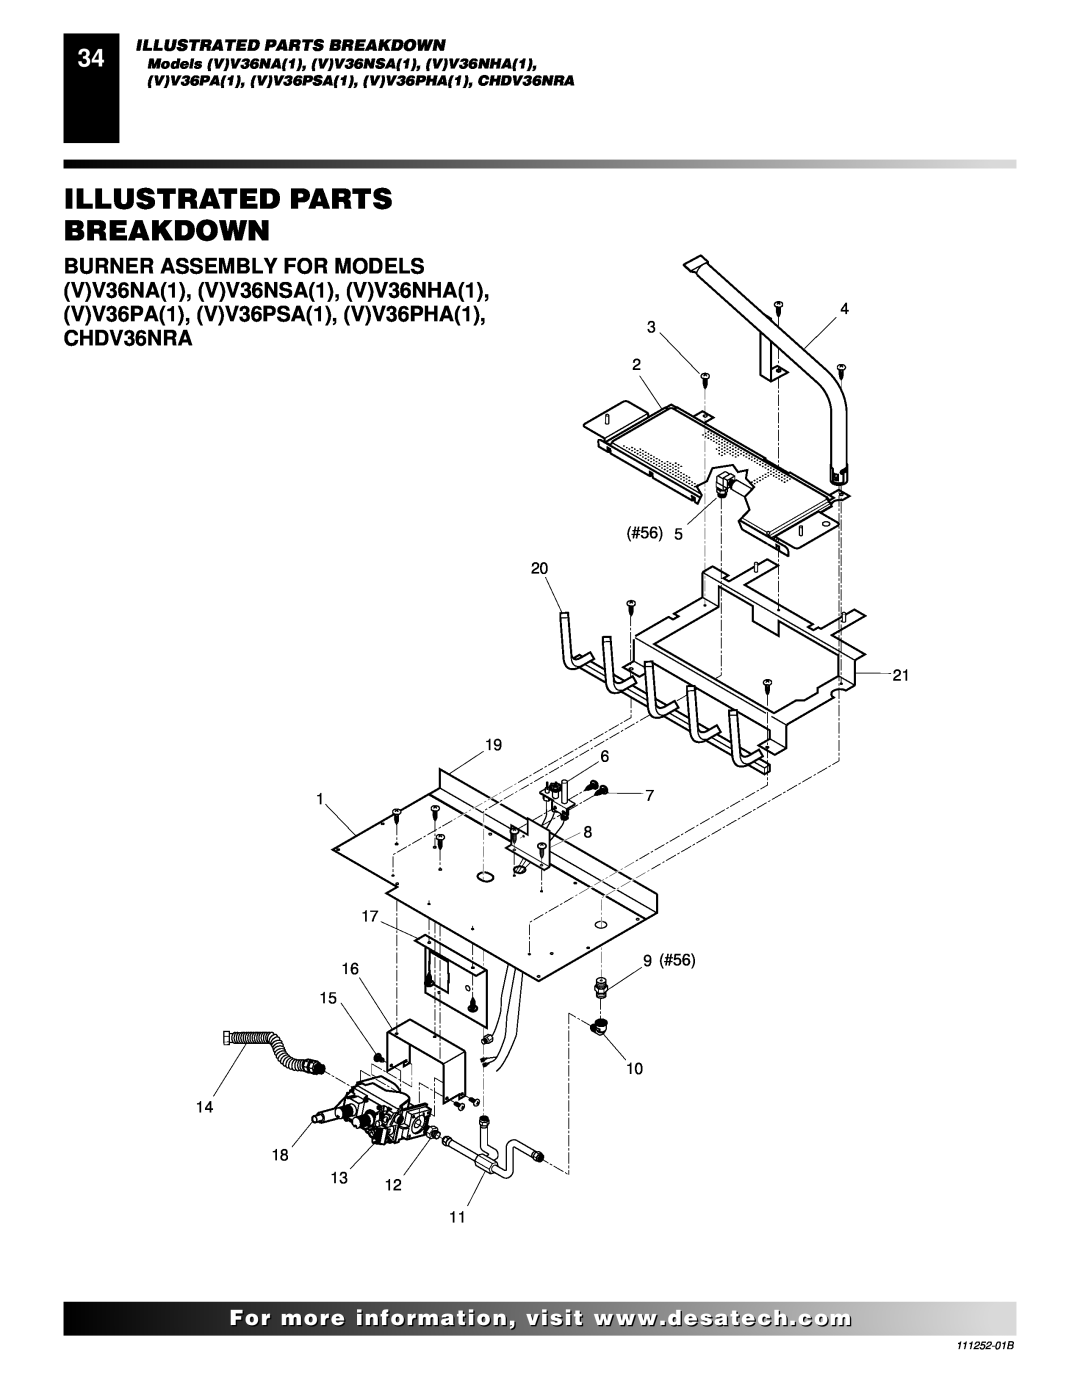 Desa (V)V36PA(1) installation manual Illustrated Parts Breakdown, 20 19 1 17 16 15, 4 3 2 #56 21 6 7 8 9#56, 111252-01B 